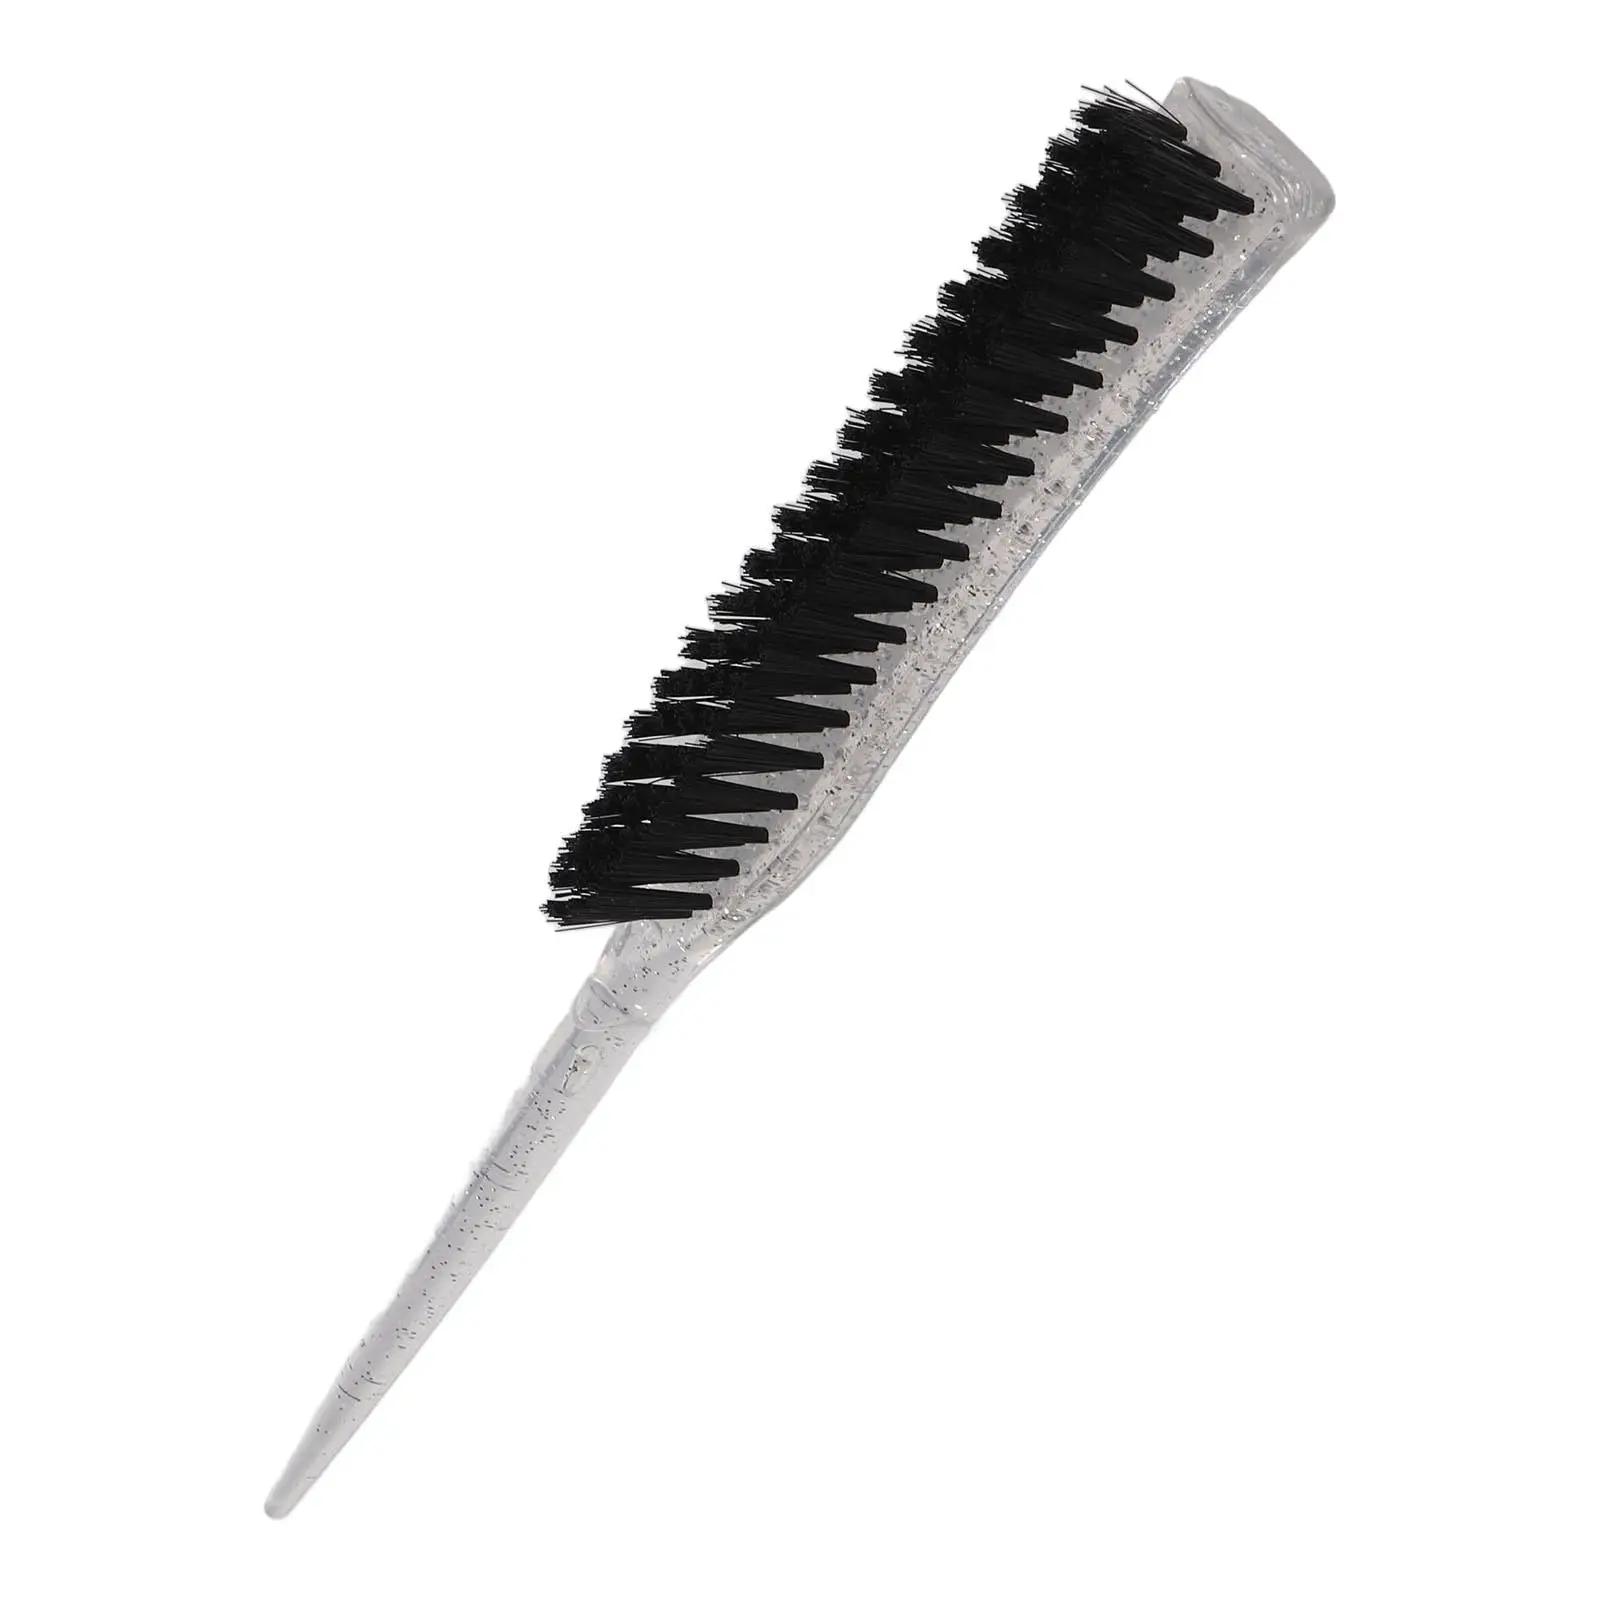 Ergonomic Nylon Handle Rat Tail Hair Teasing Brush - Volume Styling Tool for Men and Women (Home Use)